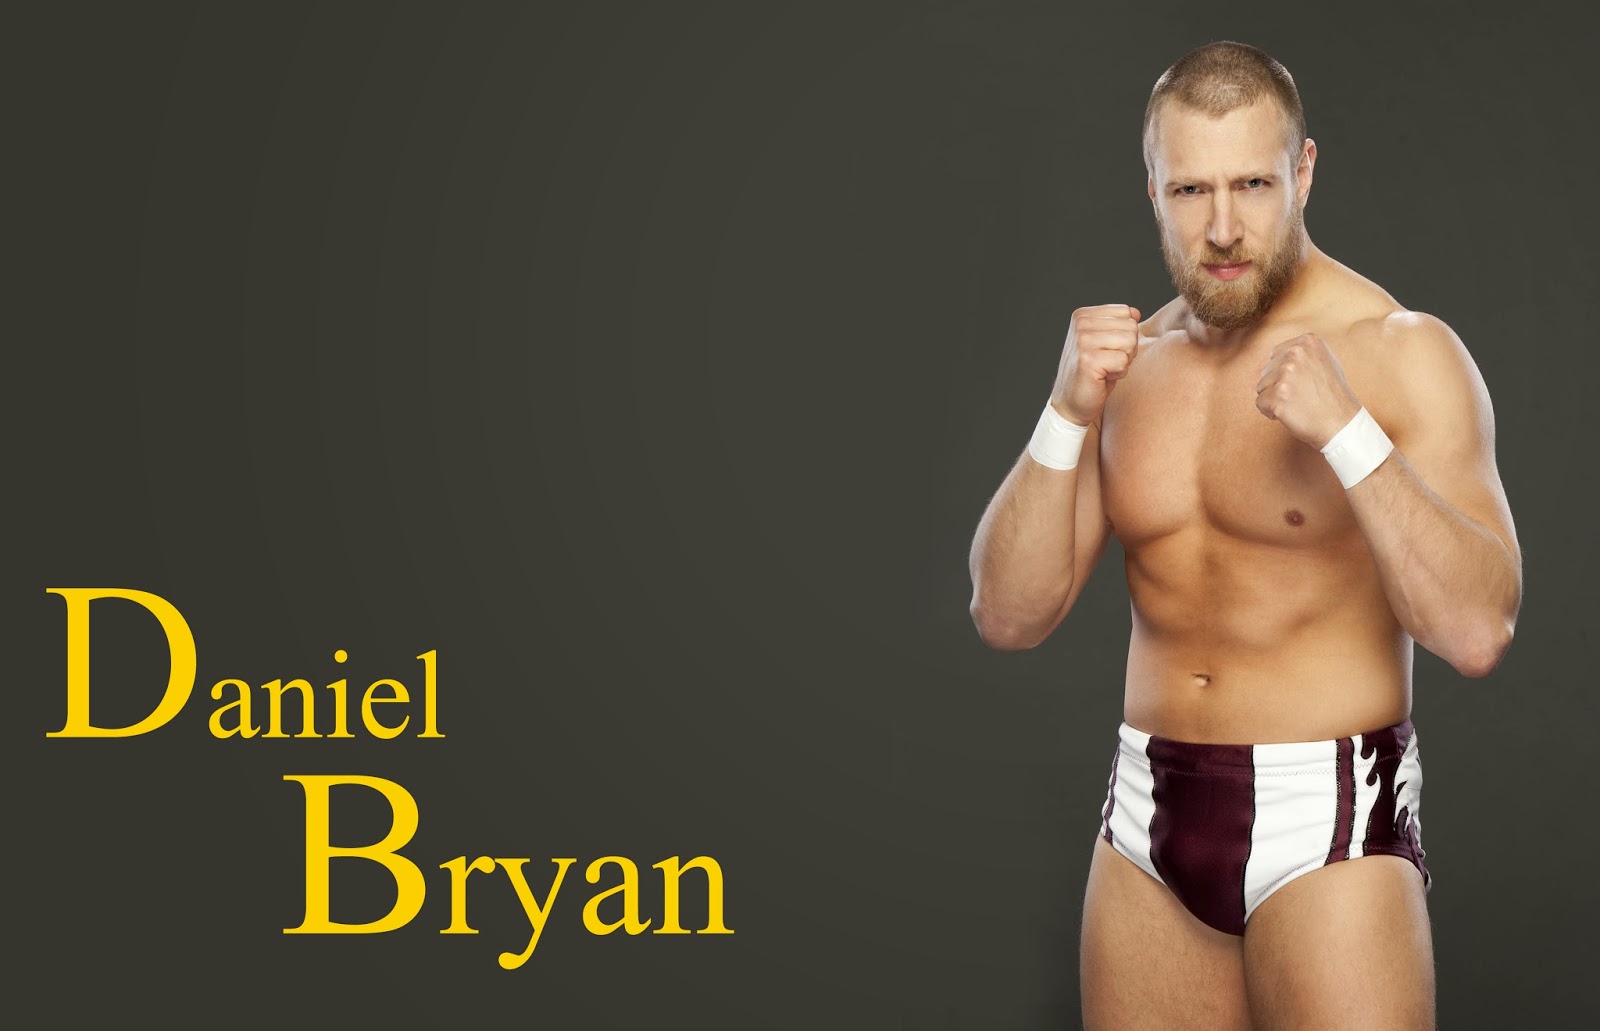 ... Bryan Hd Wallpapers Free Download | WWE HD WALLPAPER FREE DOWNLOAD